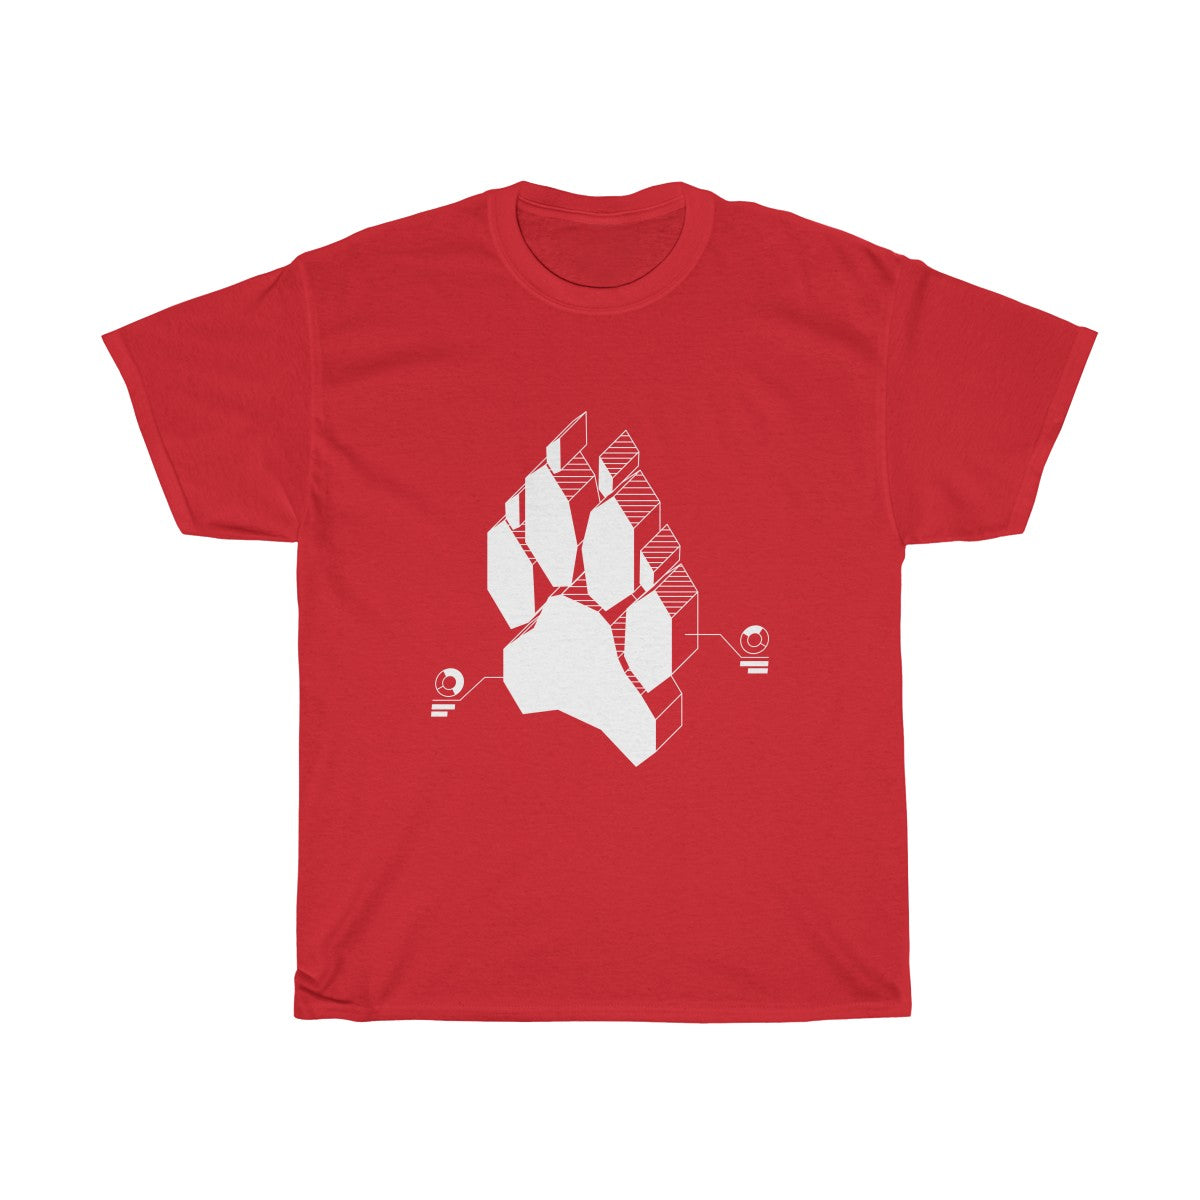 Techno Canine - T-Shirt T-Shirt Wexon Red S 